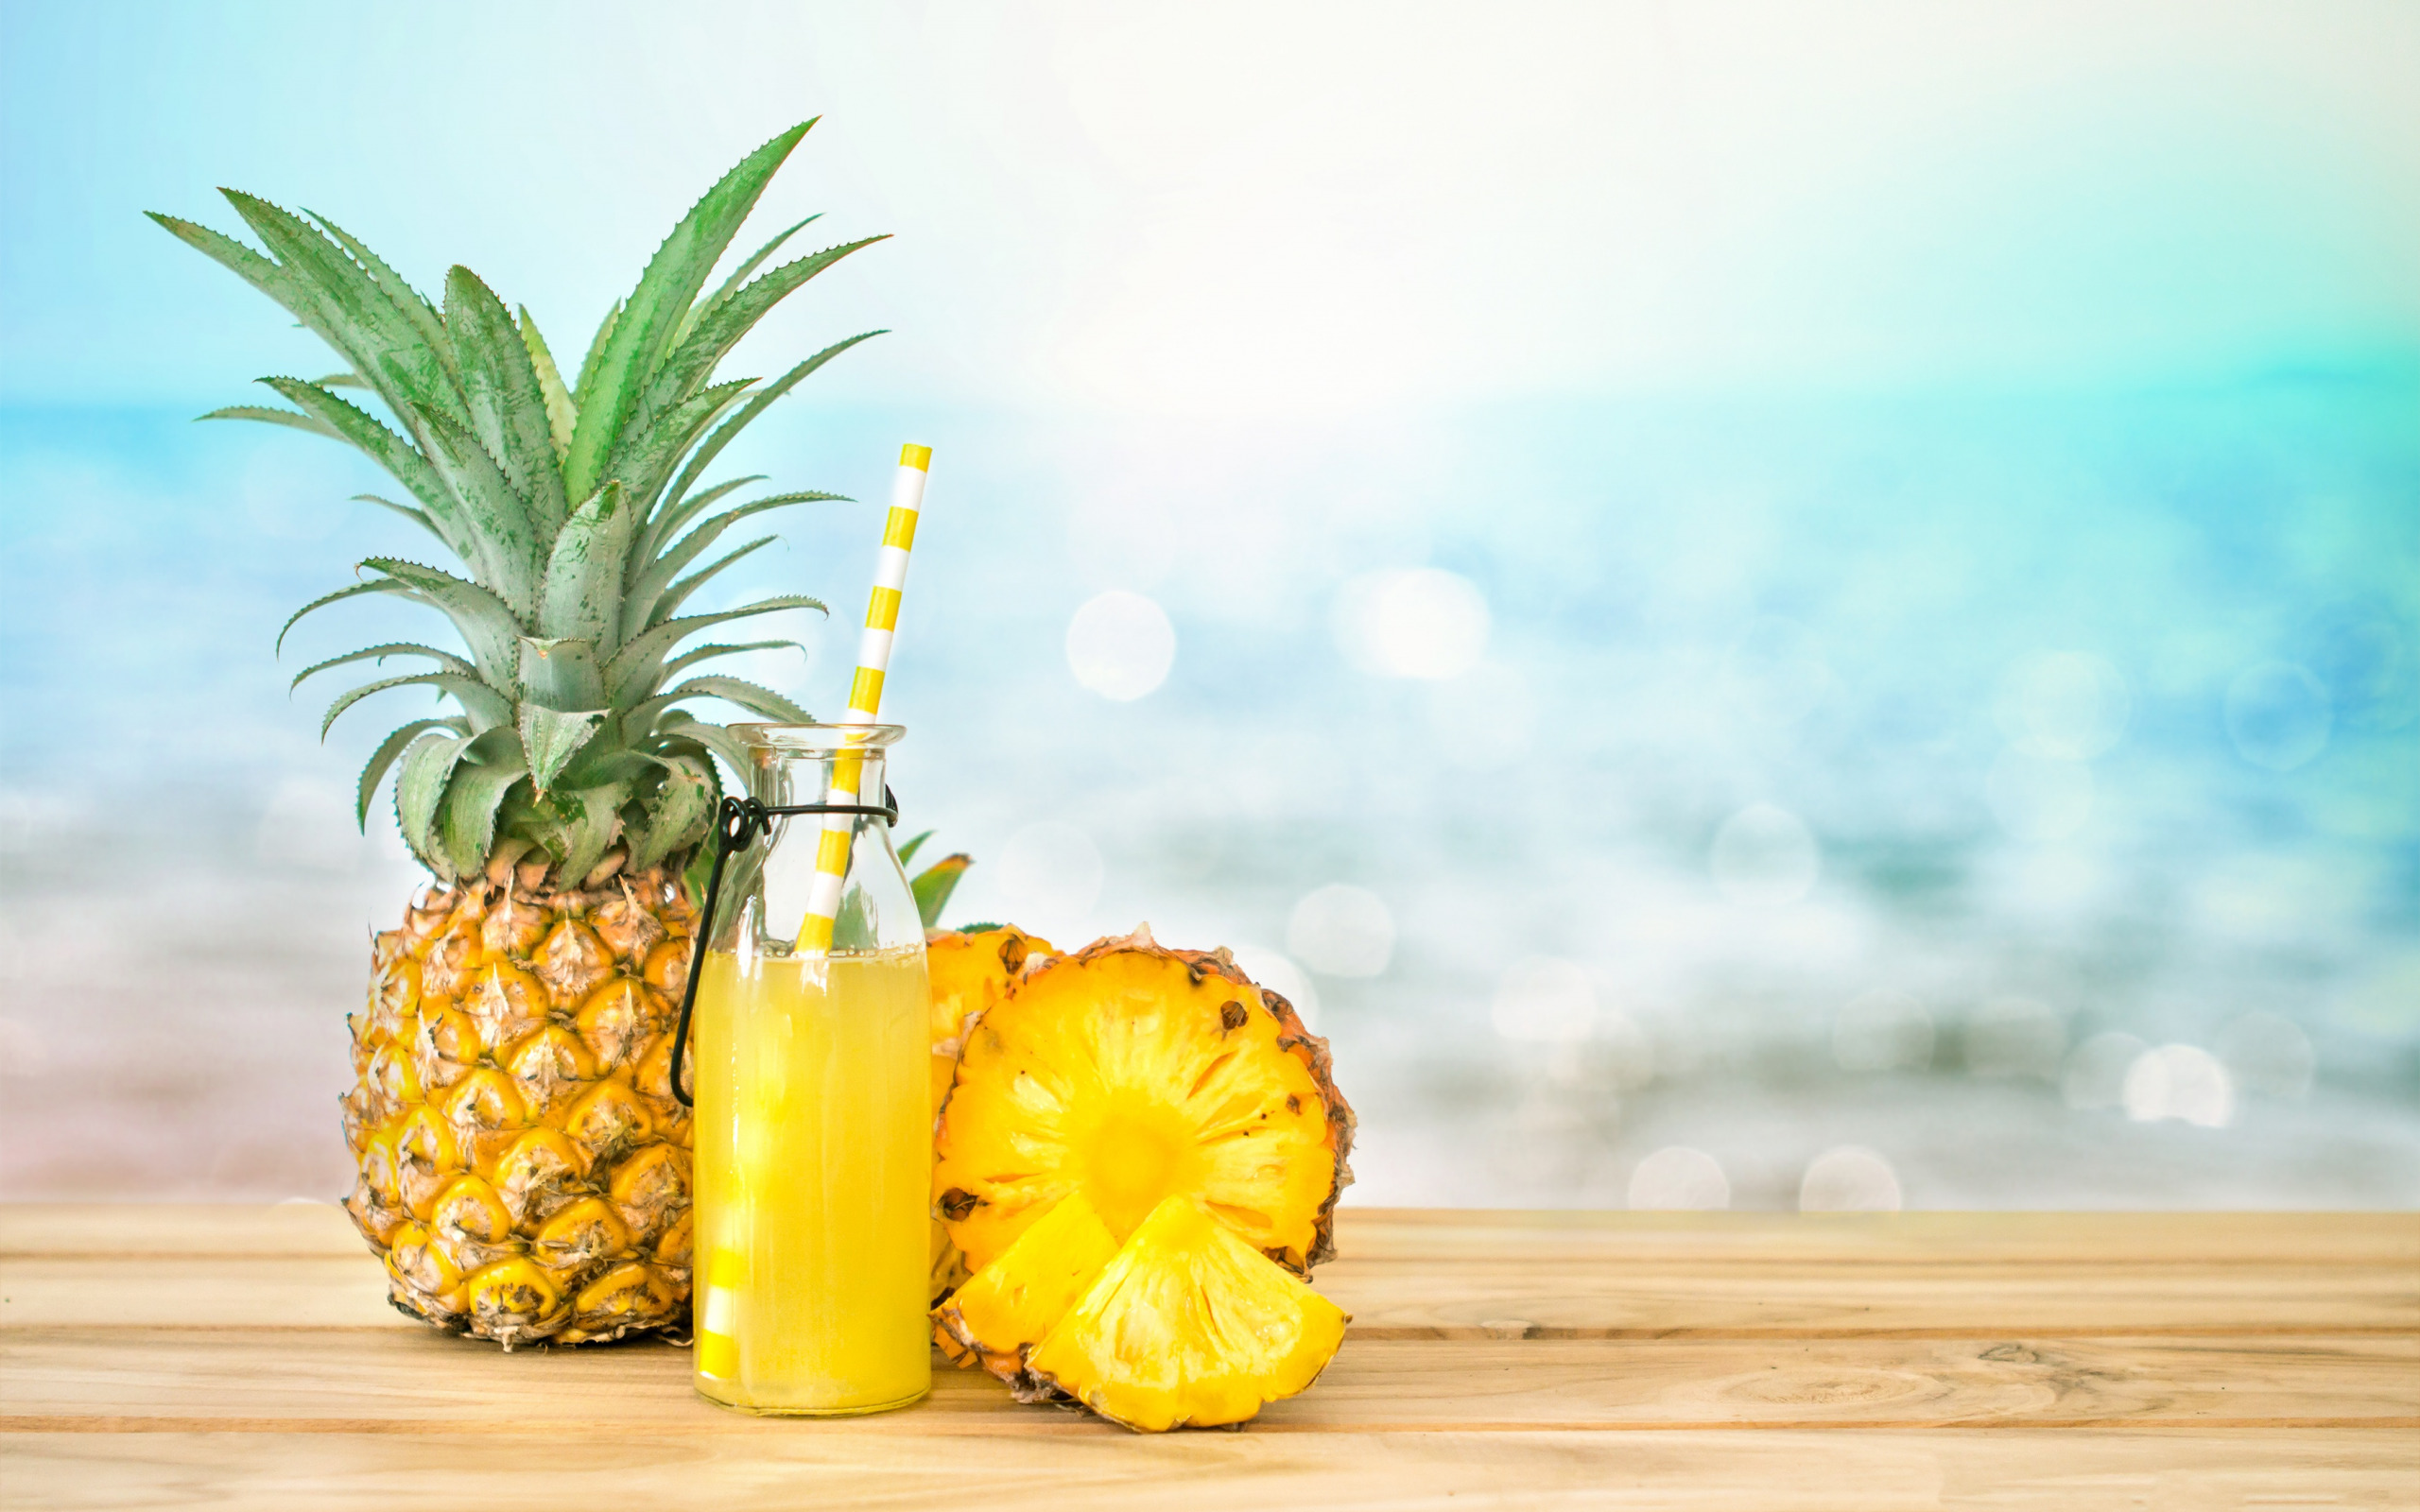 juice • fruit • juice • summer • pineapple • fresh • fruit • drink • pineapple - сок • фрукт • juice • summer • ананас • fresh • fruit • drink • pinea